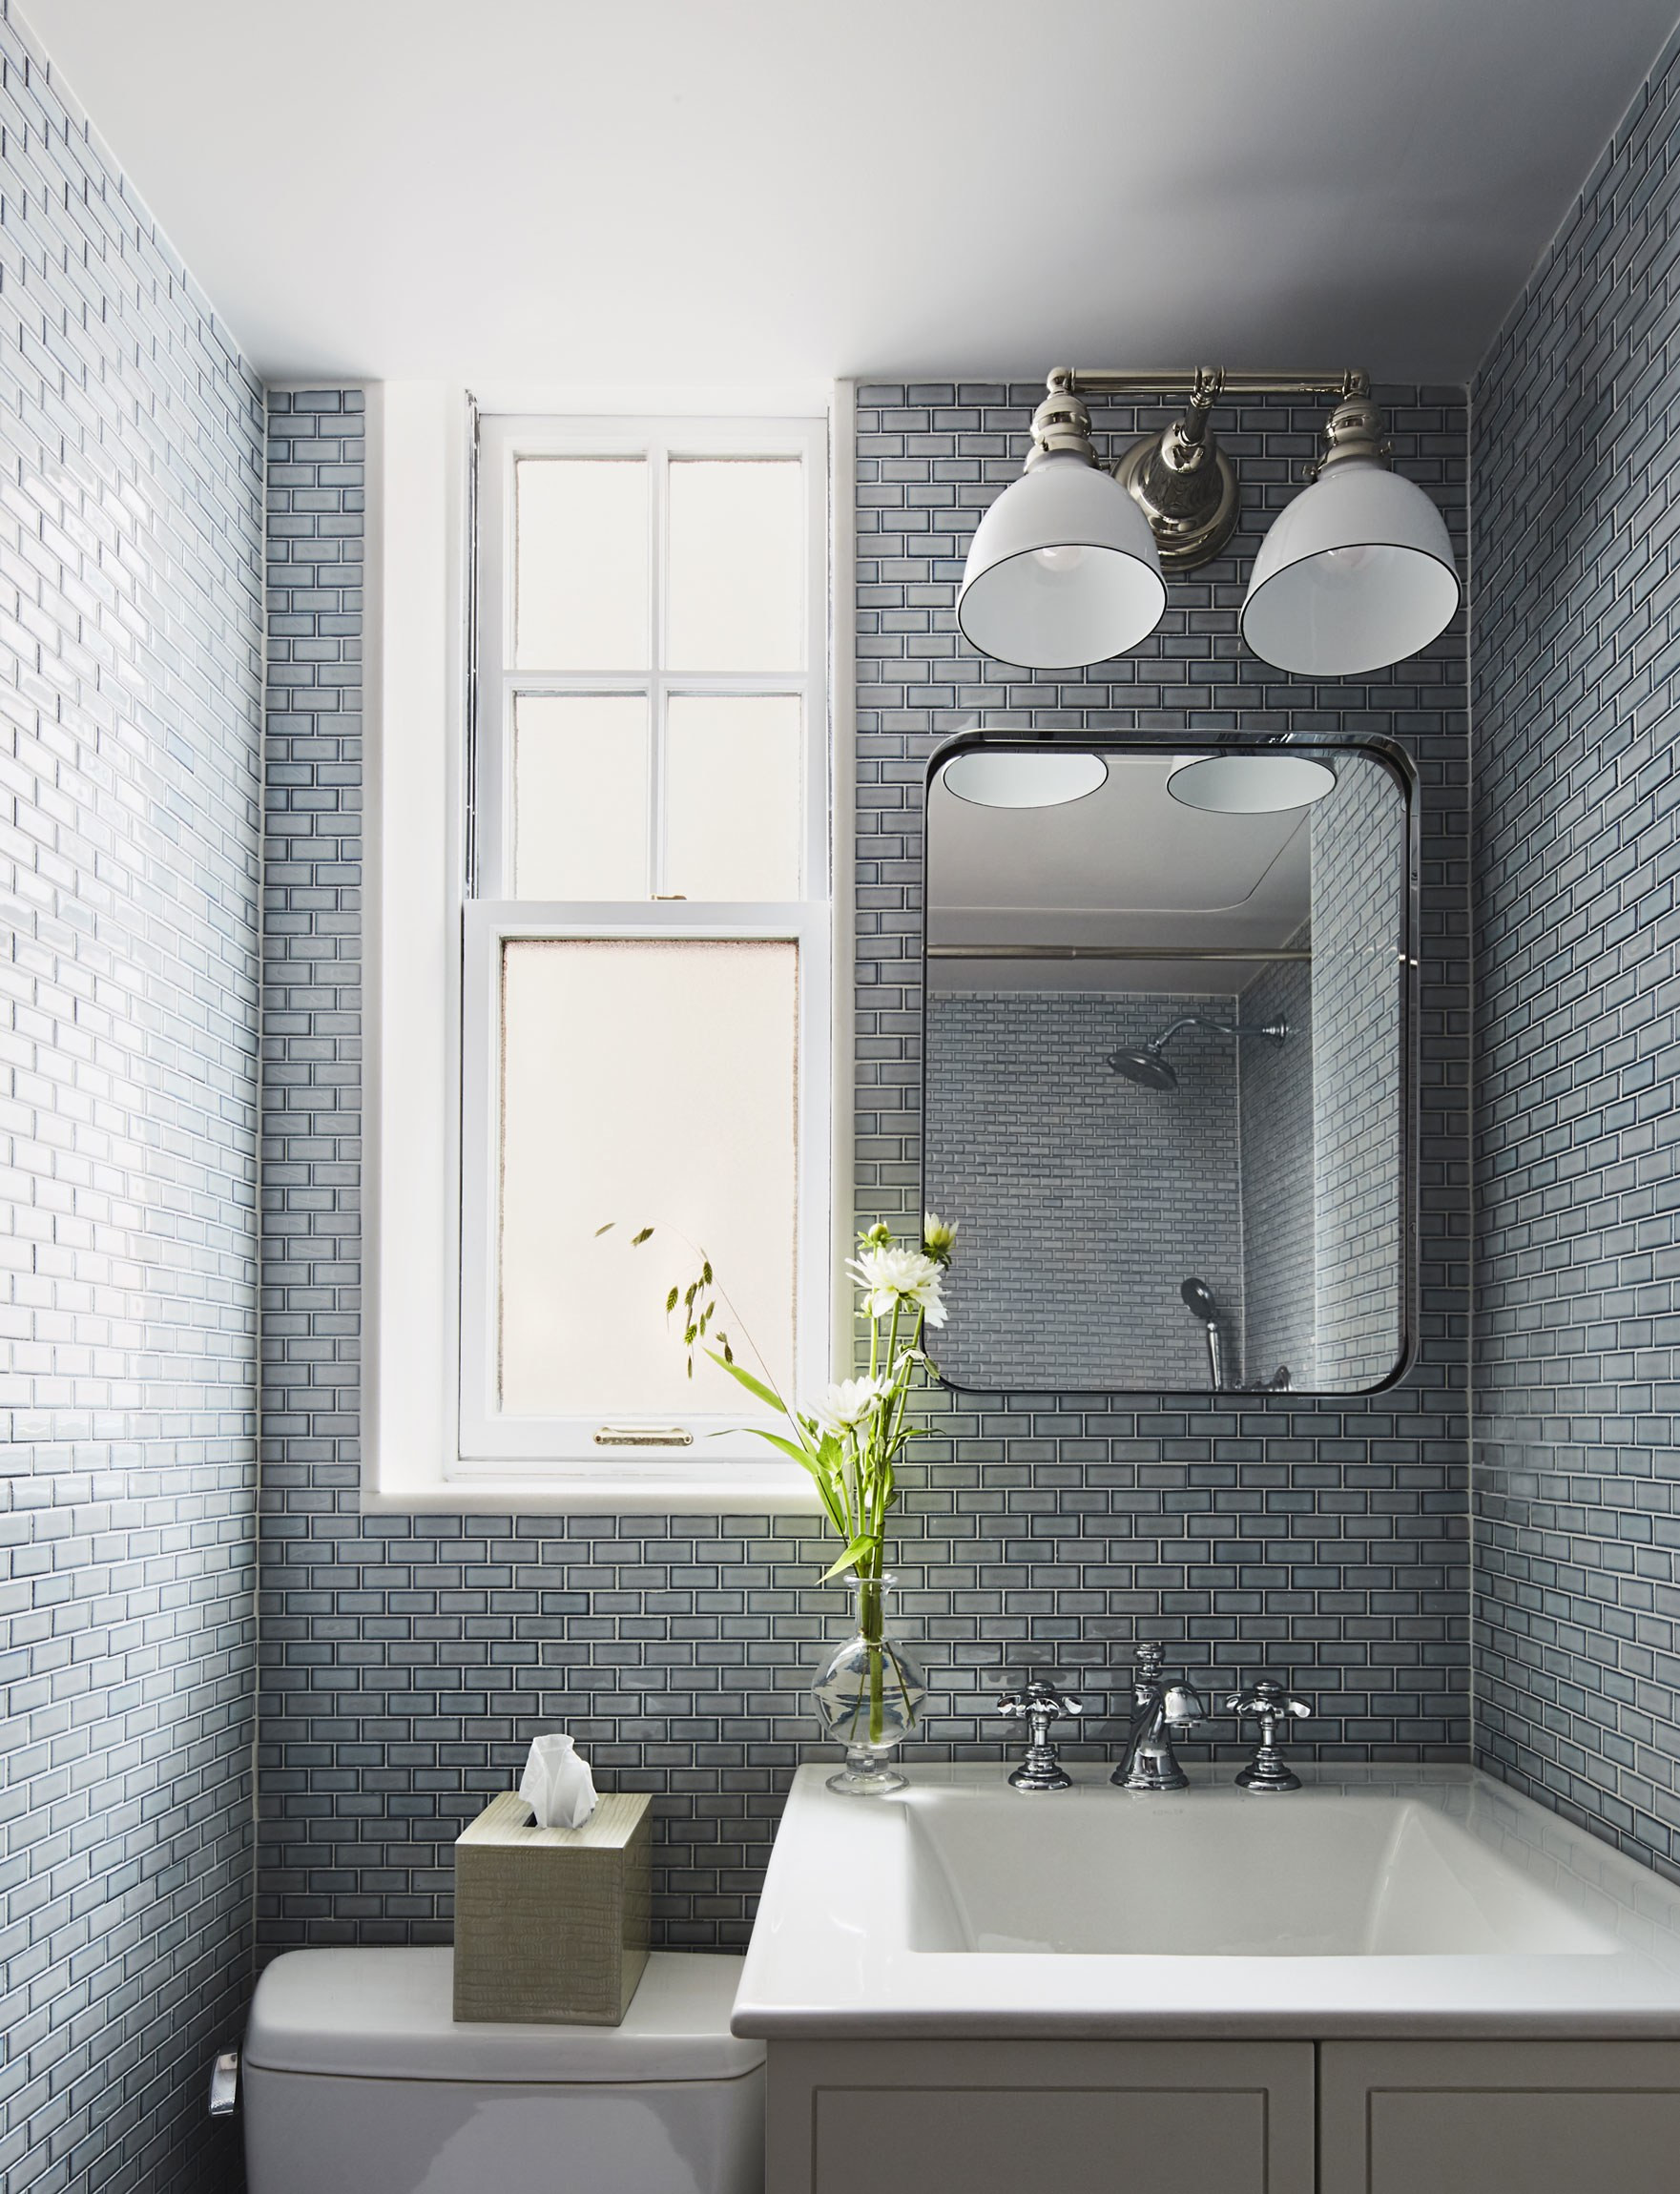 Bathroom Tiles Designs
 This Bathroom Tile Design Idea Changes Everything